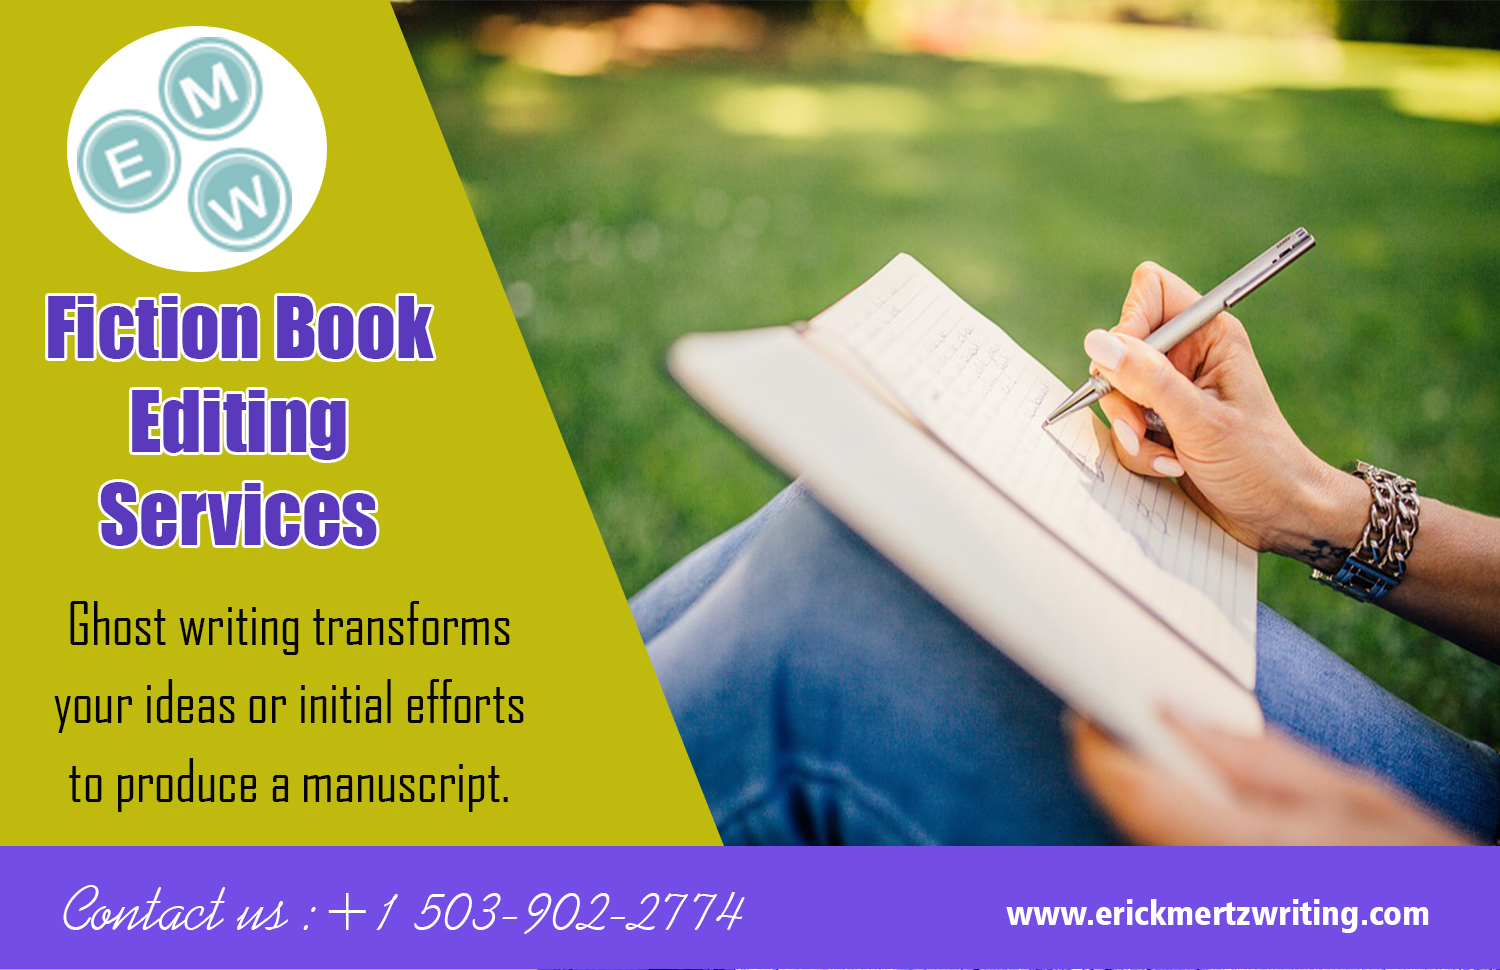 Fiction Book Editing Services | erickmertzwriting.com 